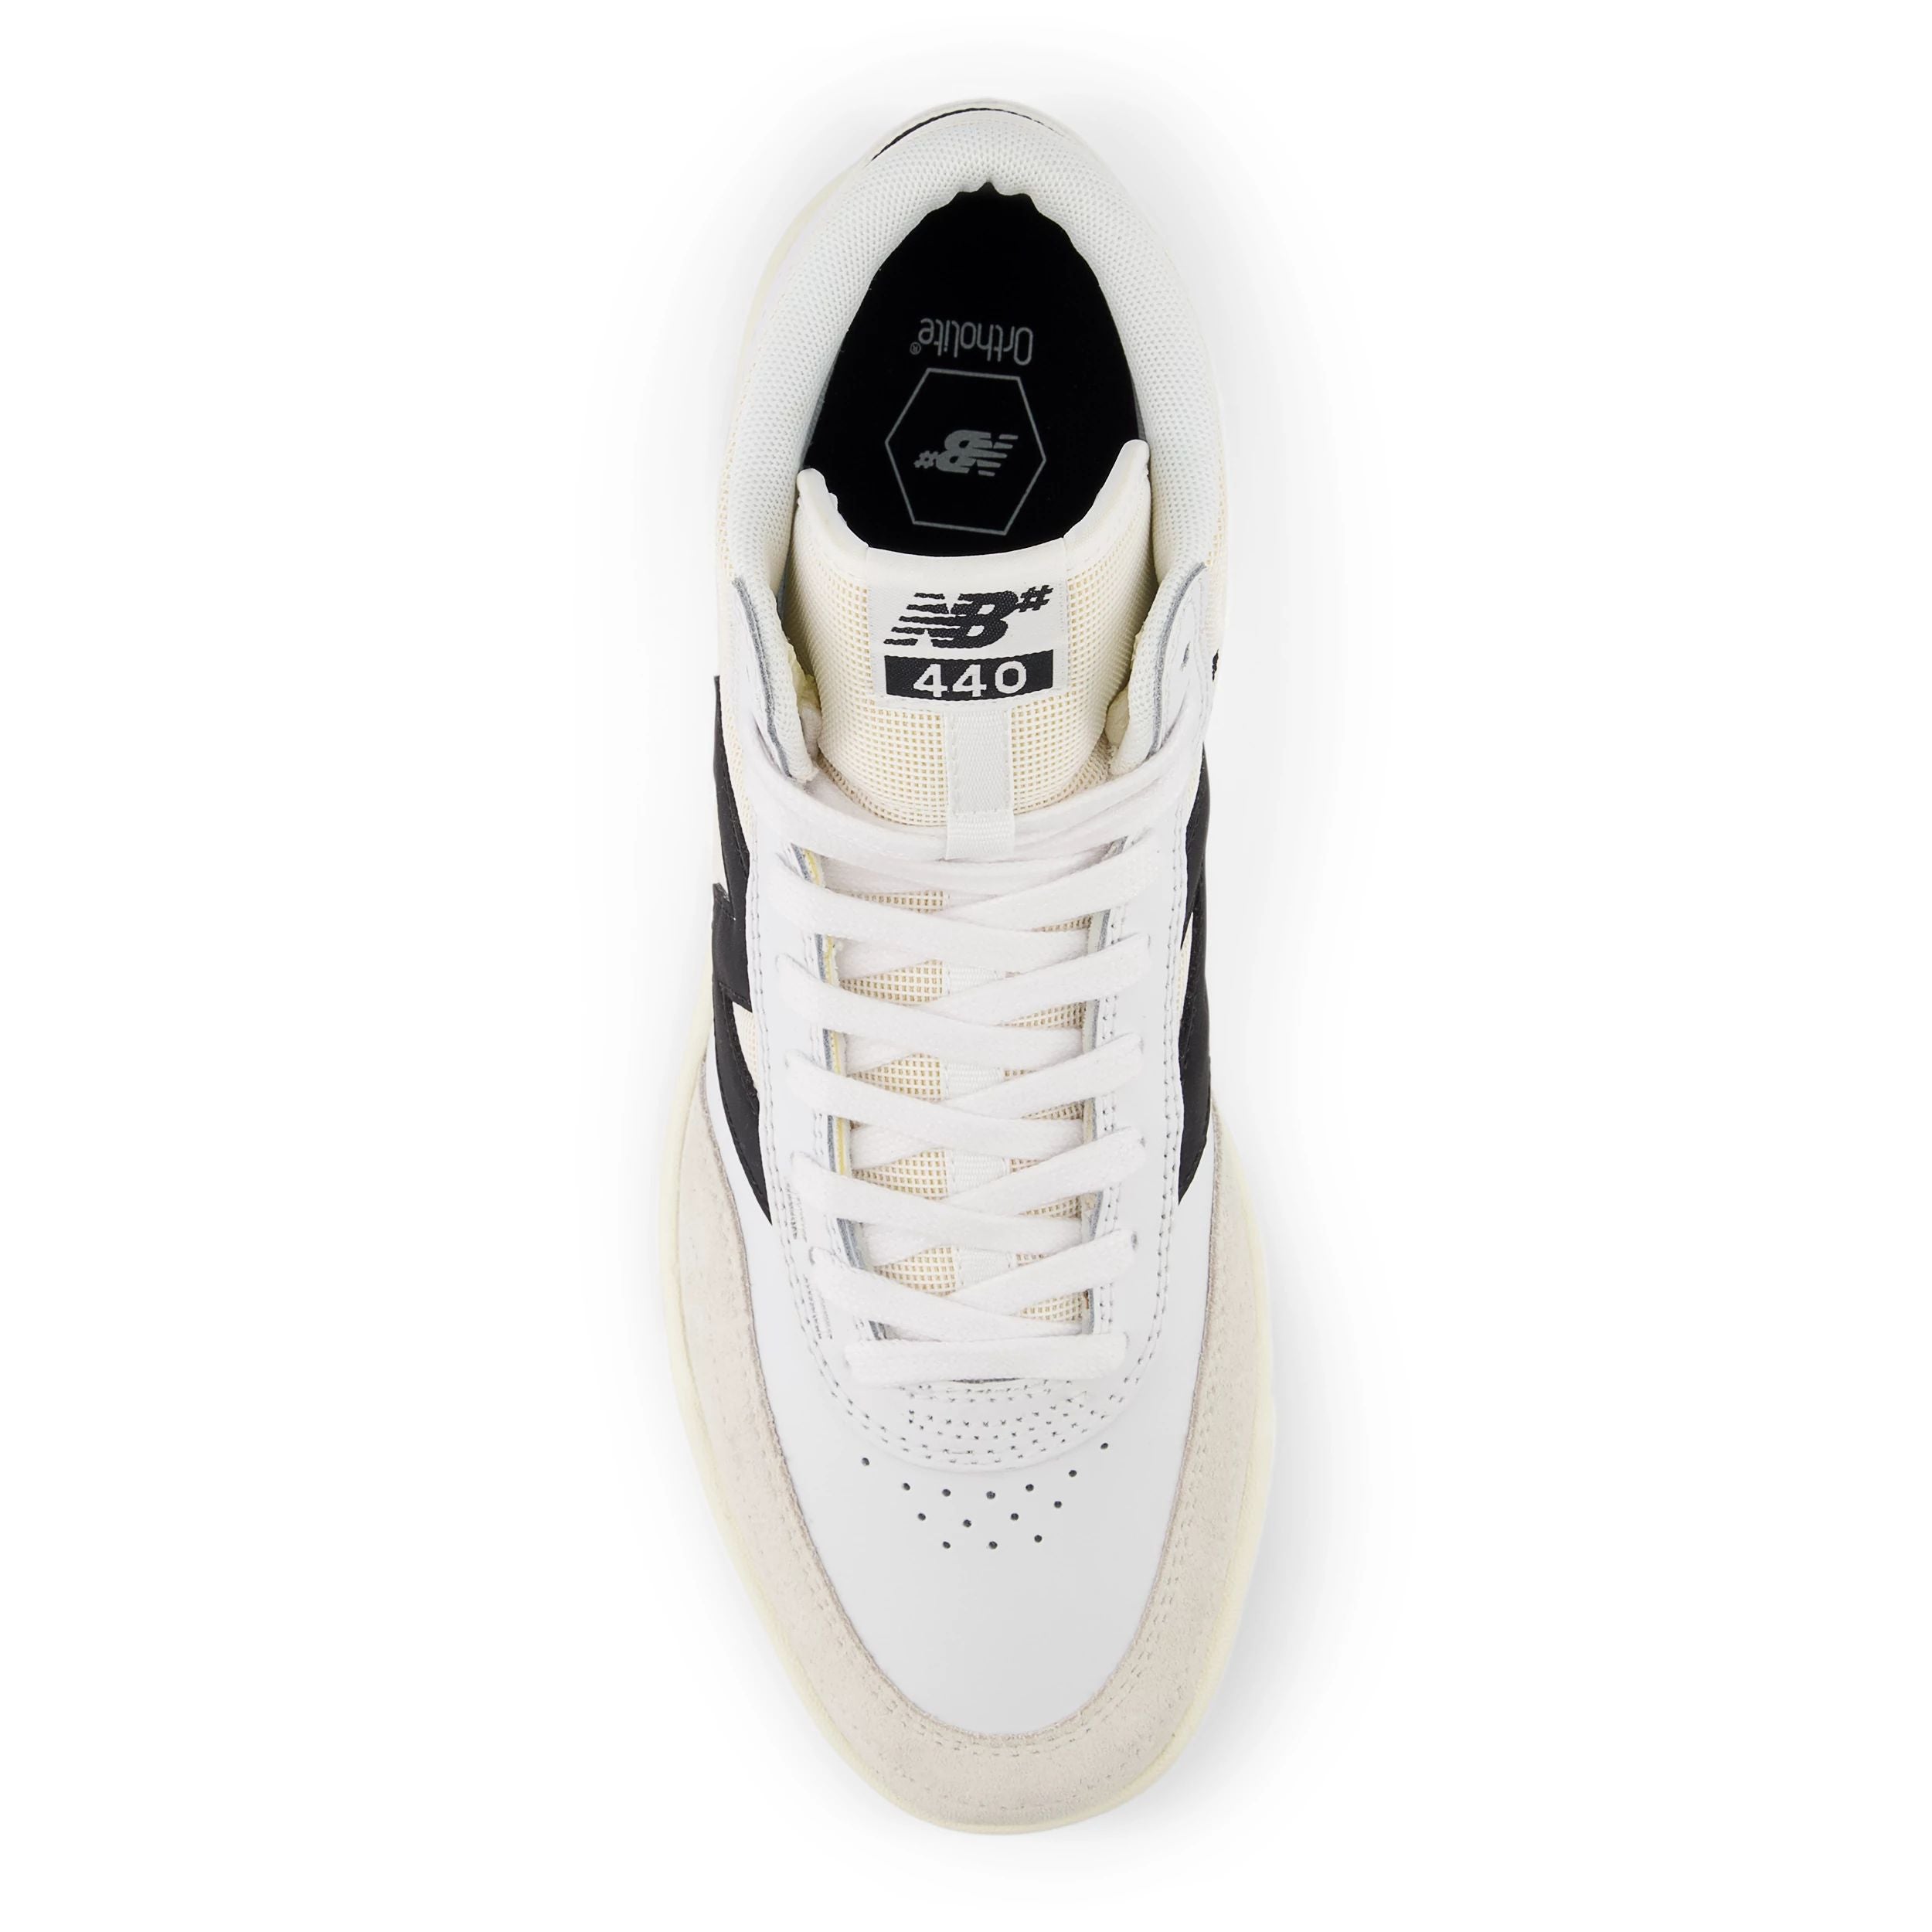 White/Black NM440v2 High NB Numeric Skate Shoe Top